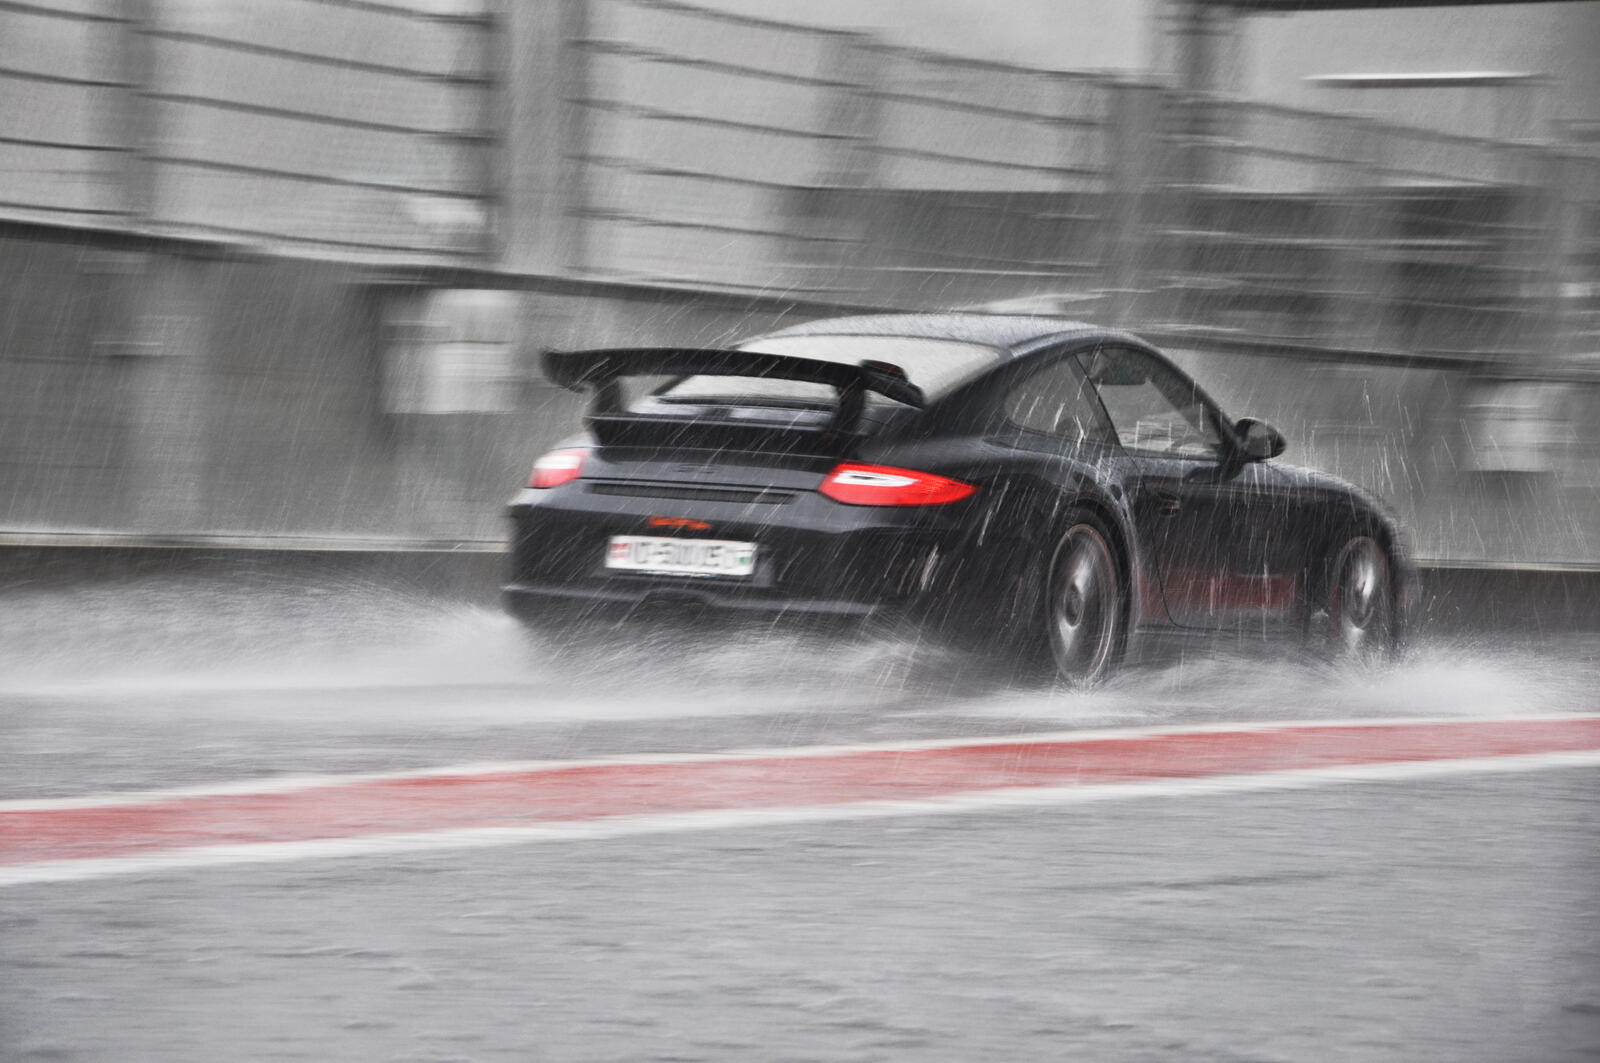 Wallpapers rain spray Porsche on the desktop